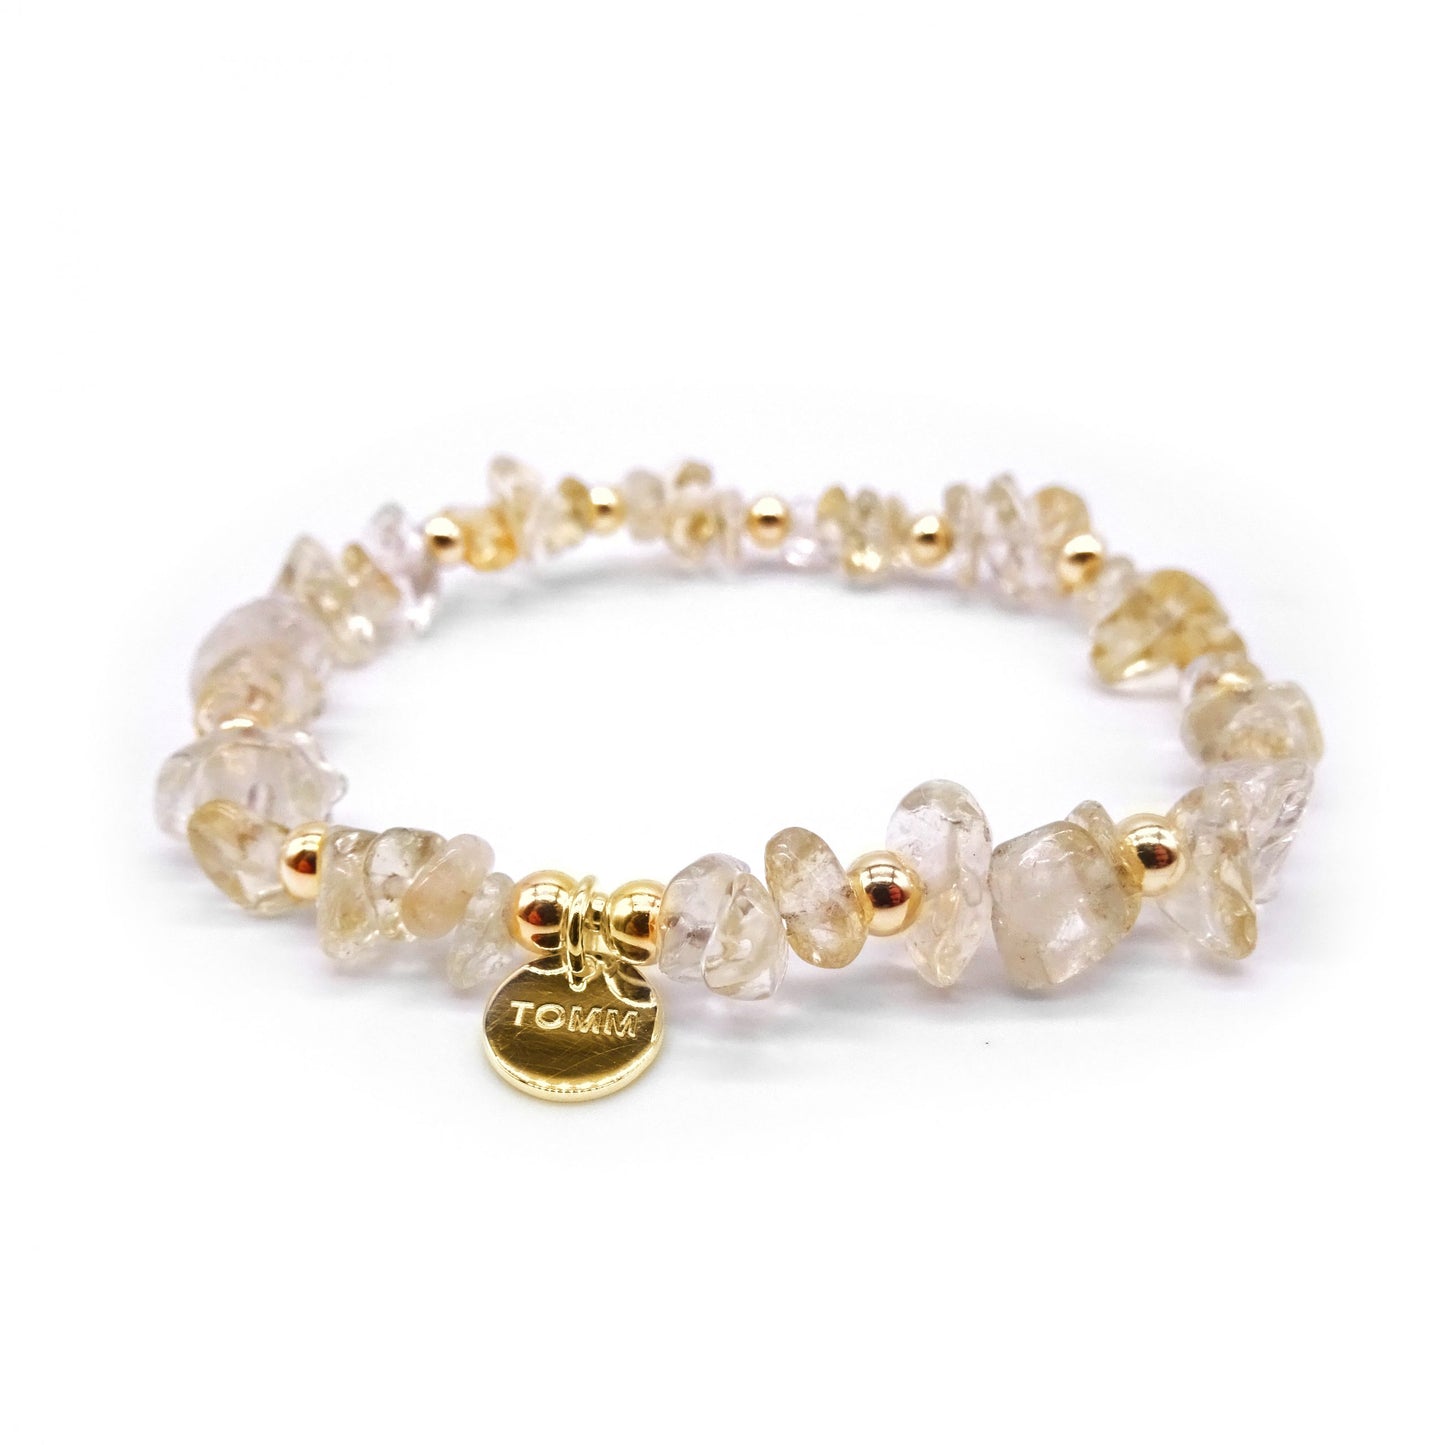 Gold citrine gemstone bracelet